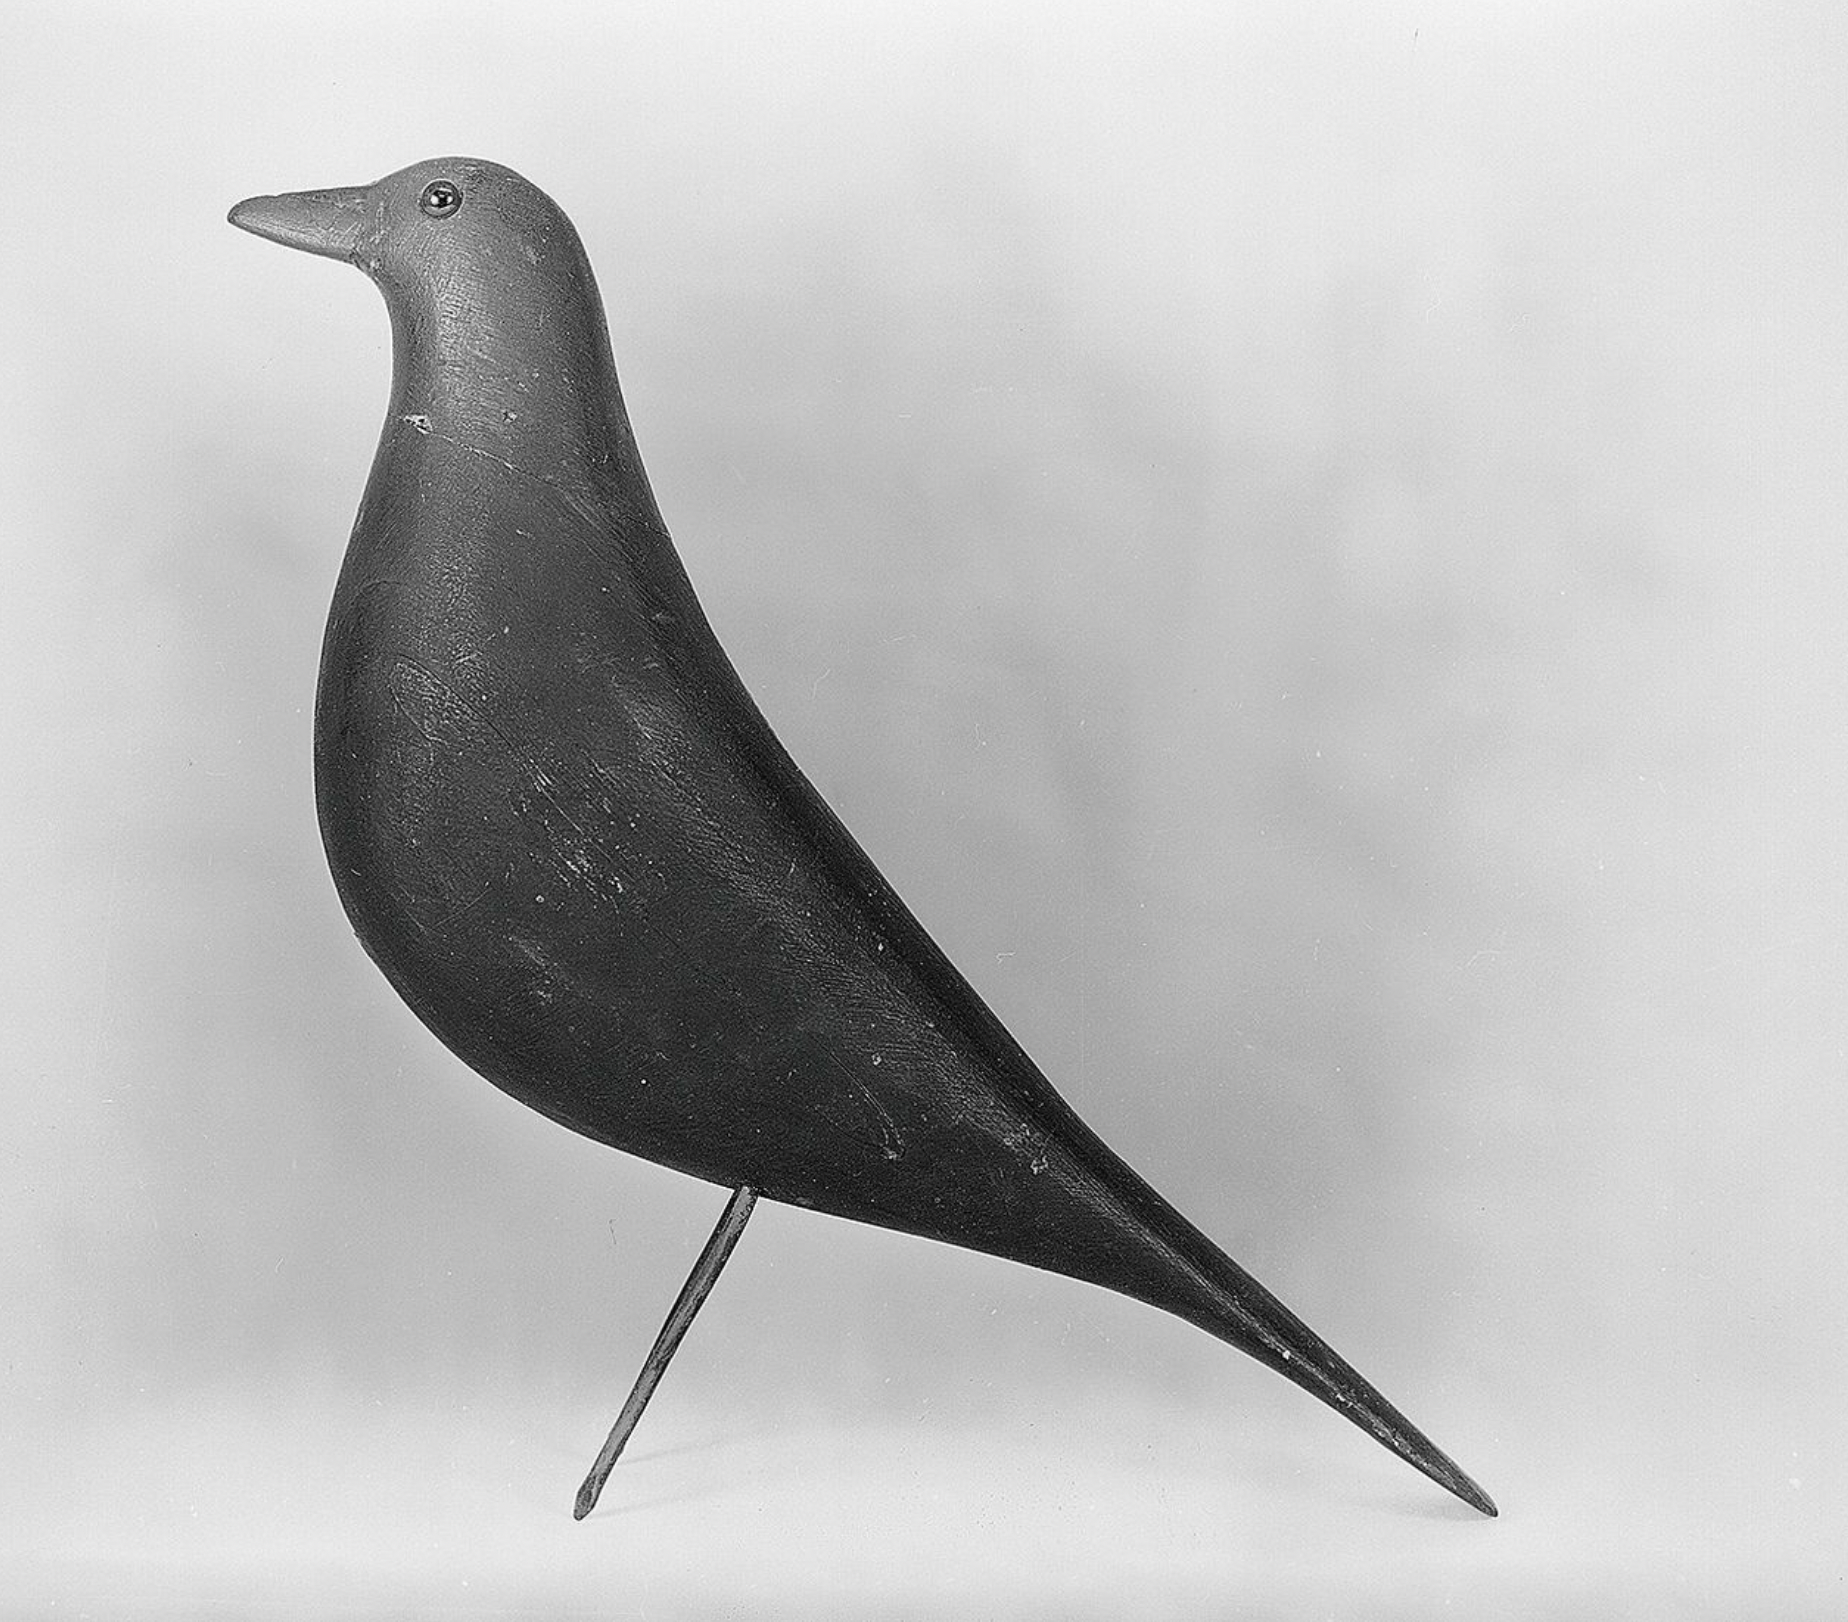 Vitra Eames House bird wintercollectie 2023 - limited editie